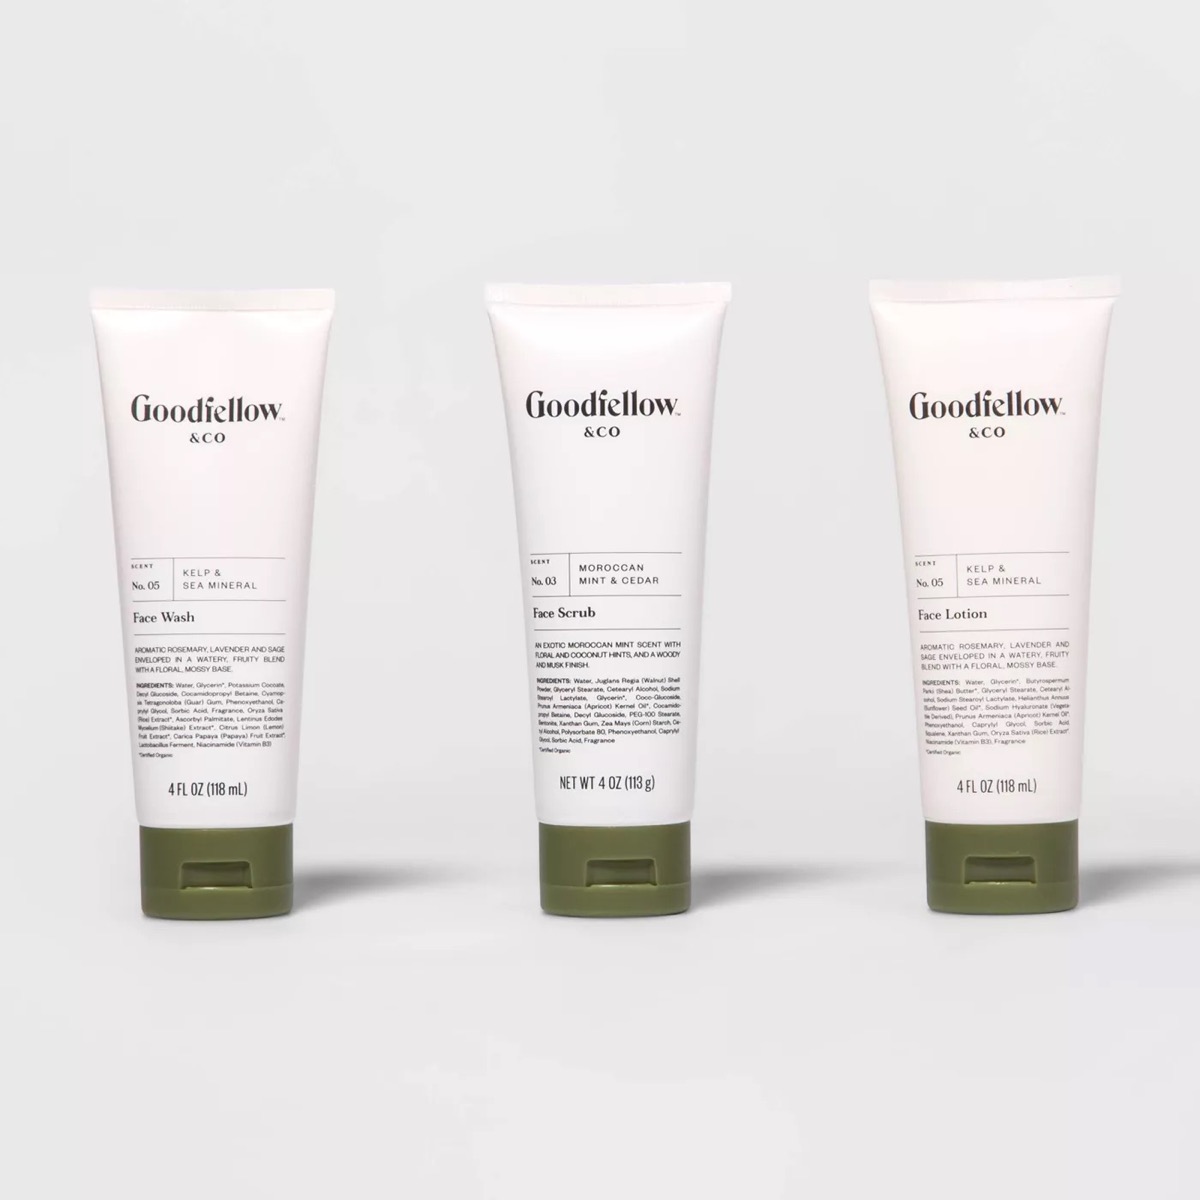 Goodfellow facial skin care gift set